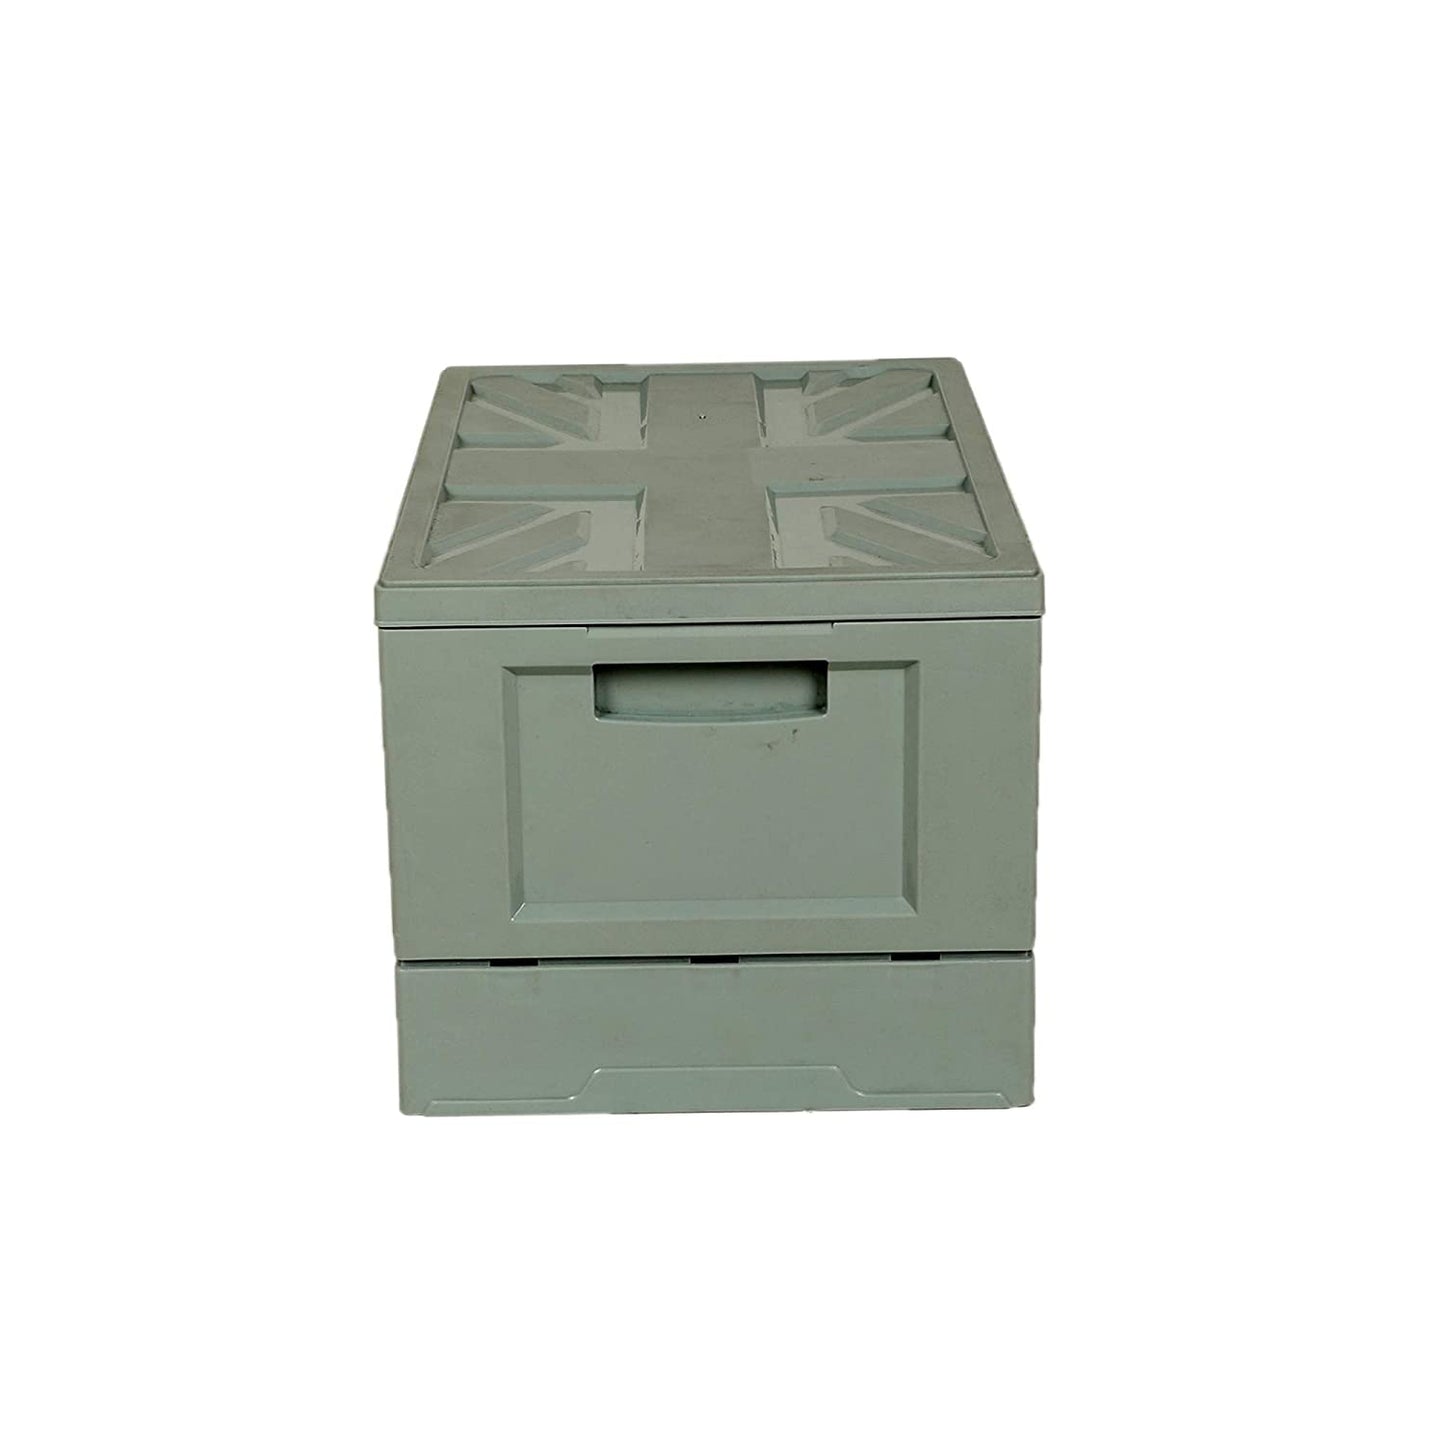 Foldable Storage Box Grey (Small)